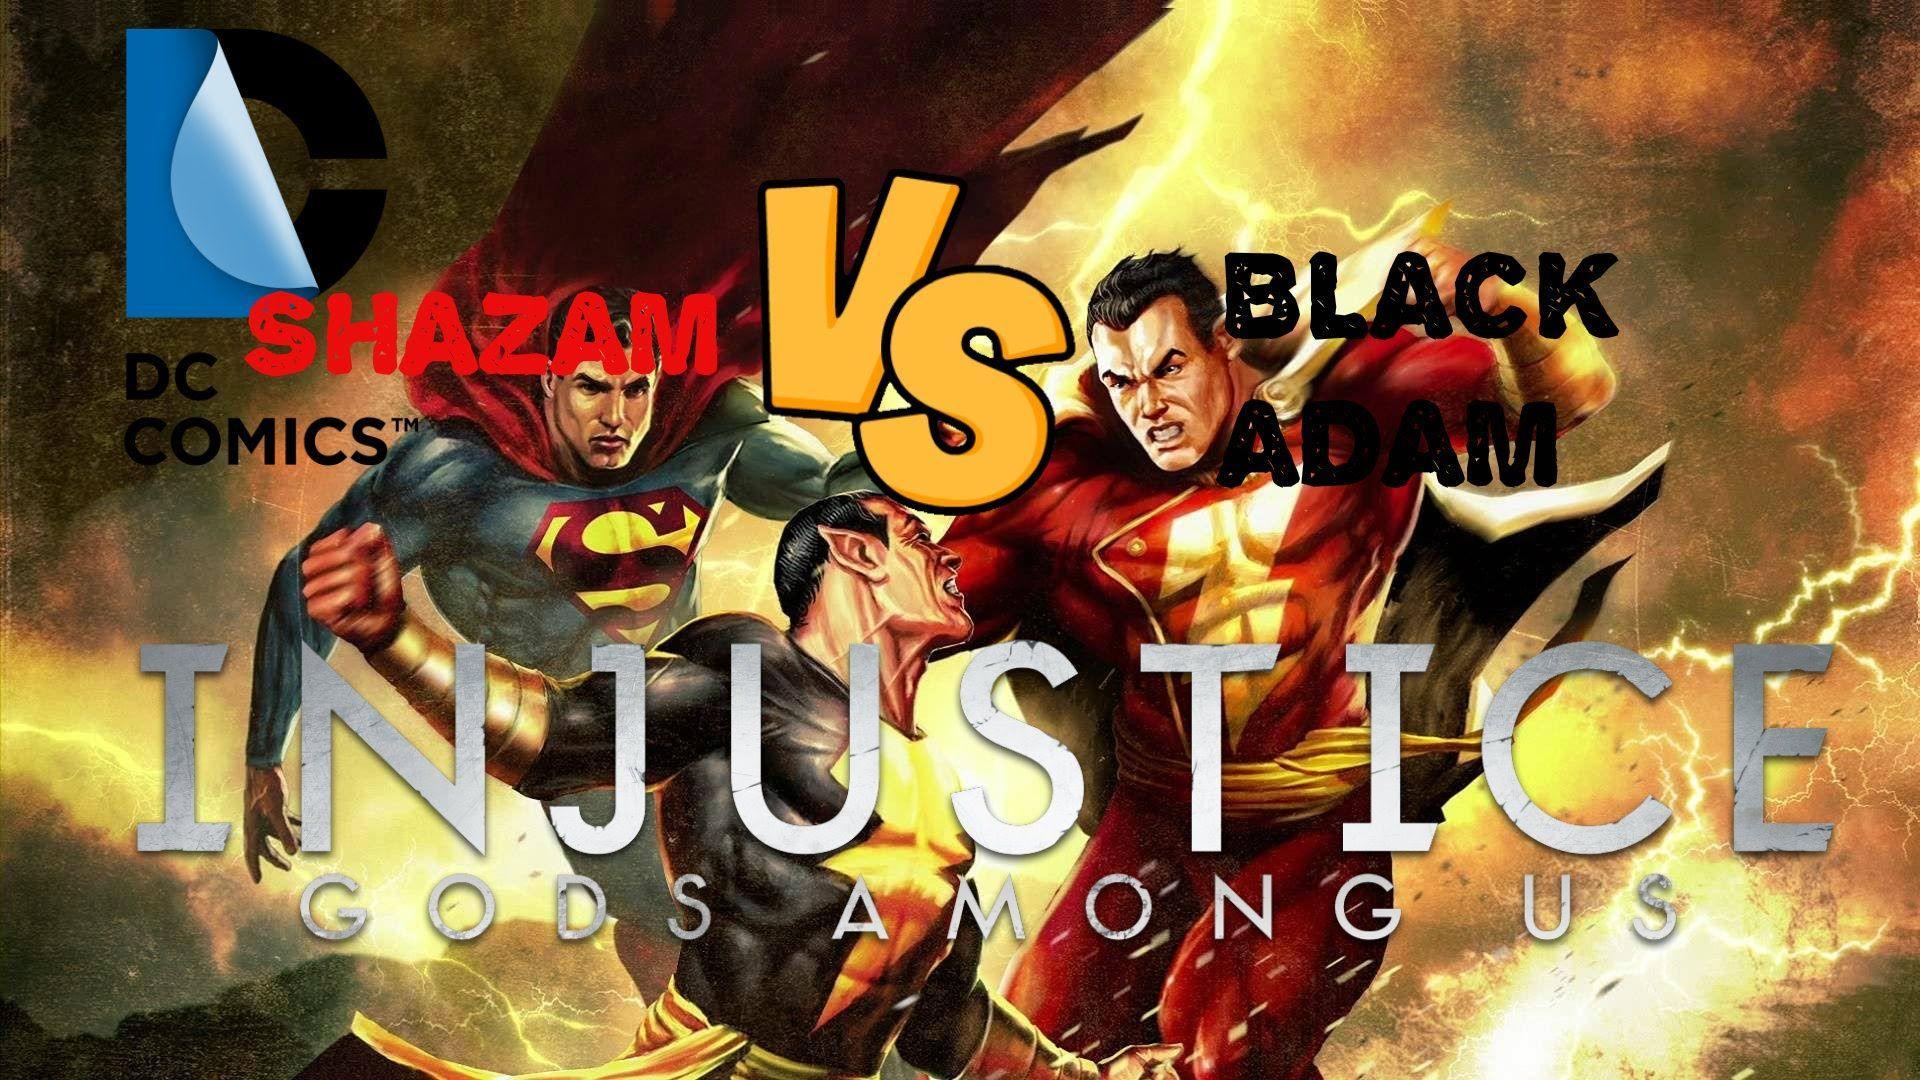 Superman Vs Black Adam Wallpaper For Pc 4k Download, Black Adam, Movies